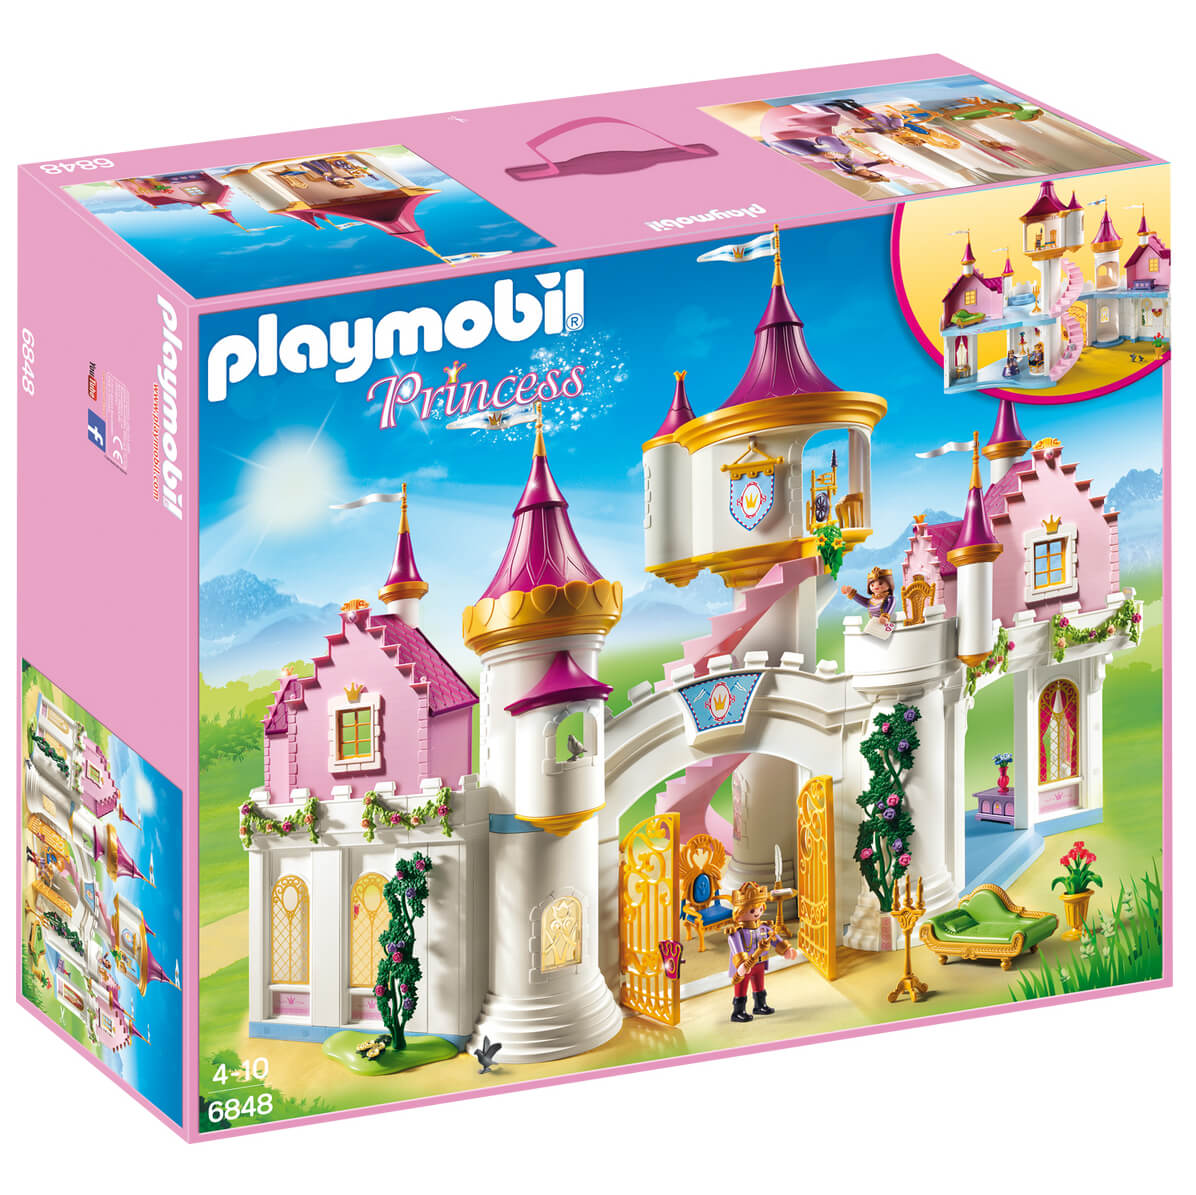 Playmobil Grand Princess Castle (6848) Toys - Zavvi US